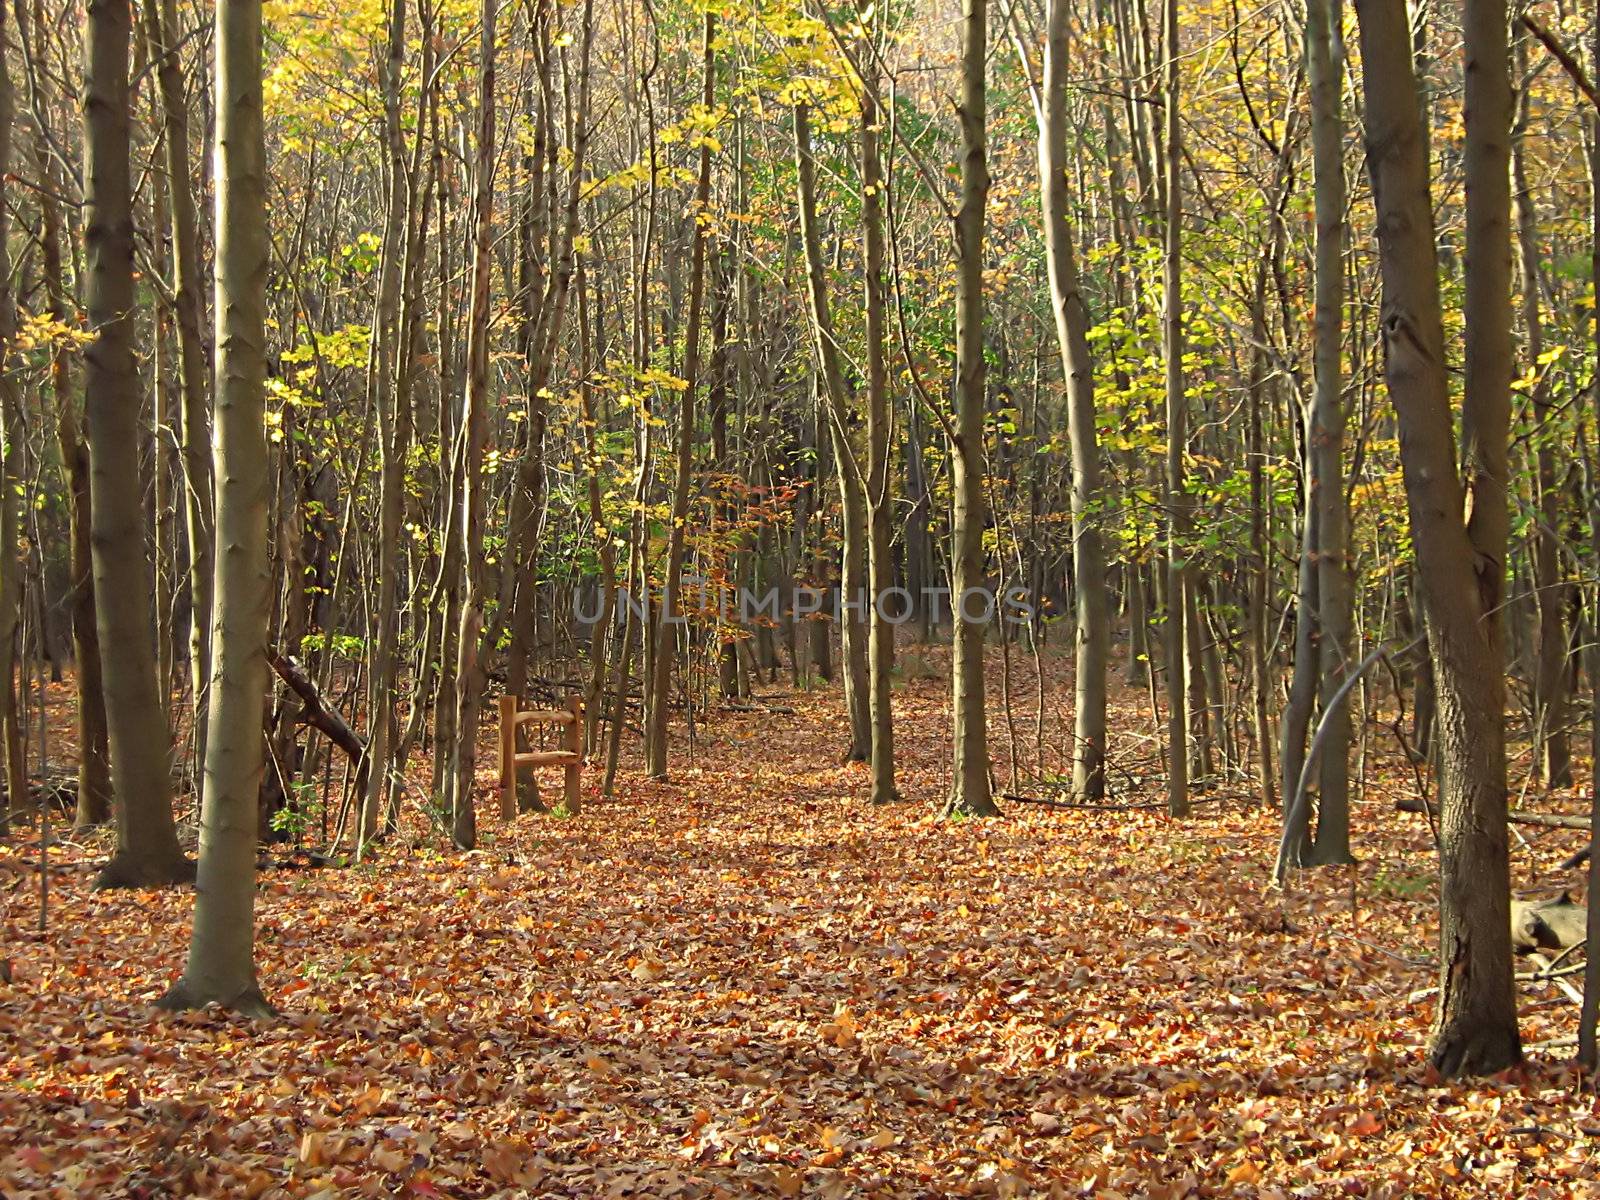 Woods In Autumn by llyr8